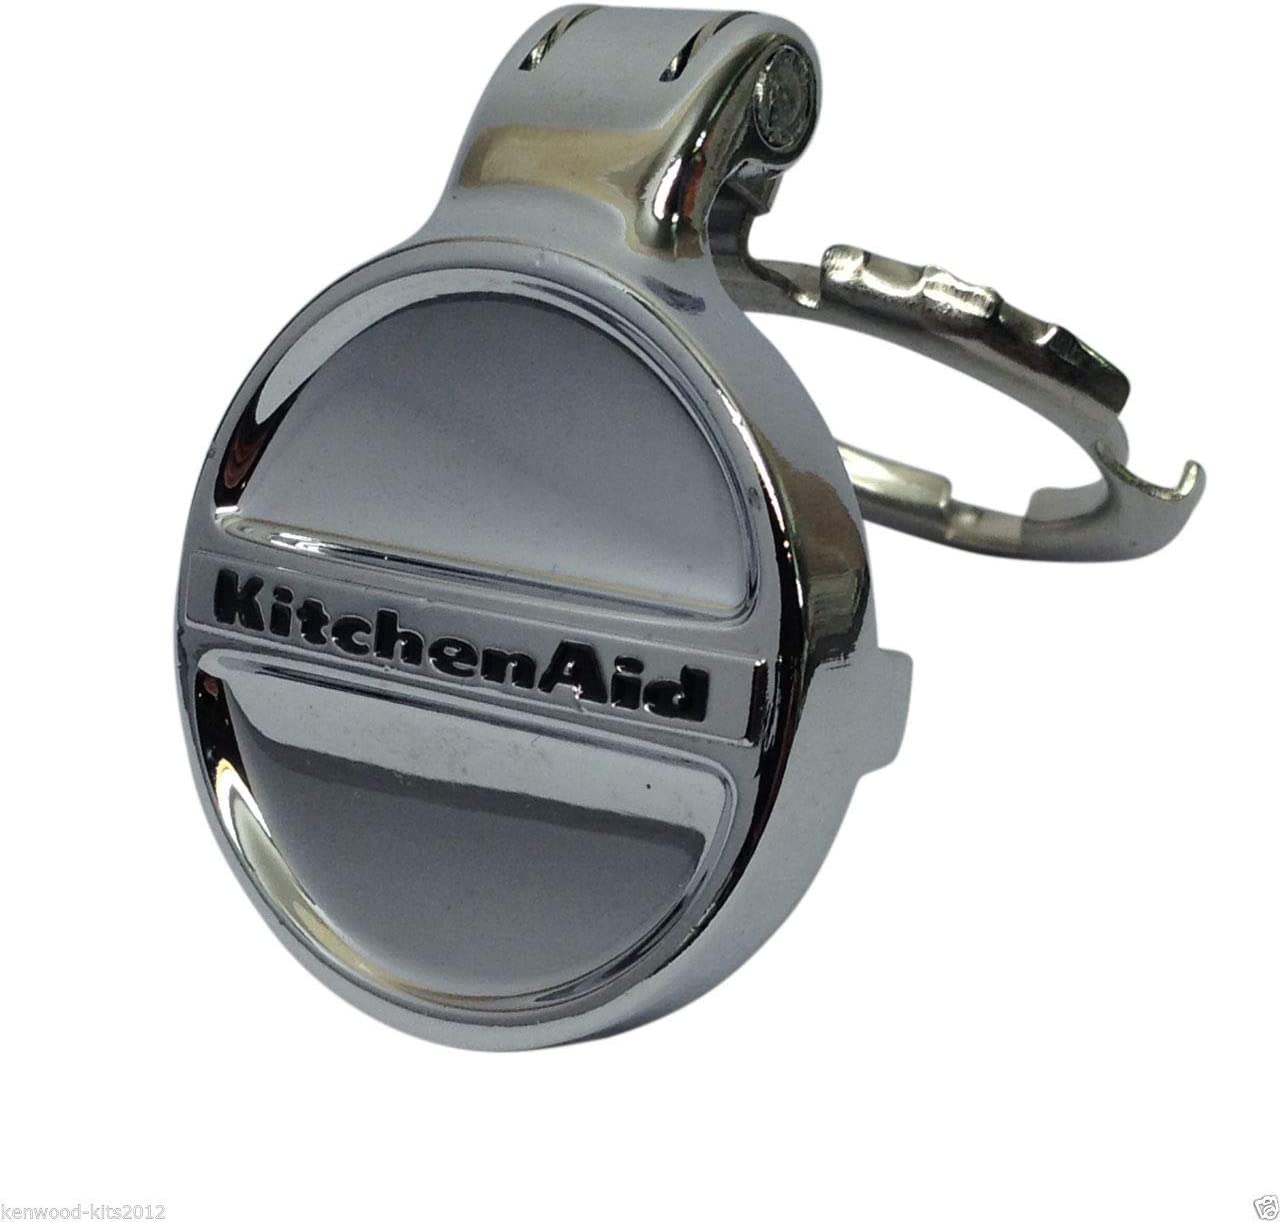 Kitchenaid 6QT Blender with Hinge Attachment W11123129 Compatible with 6QT Mixers